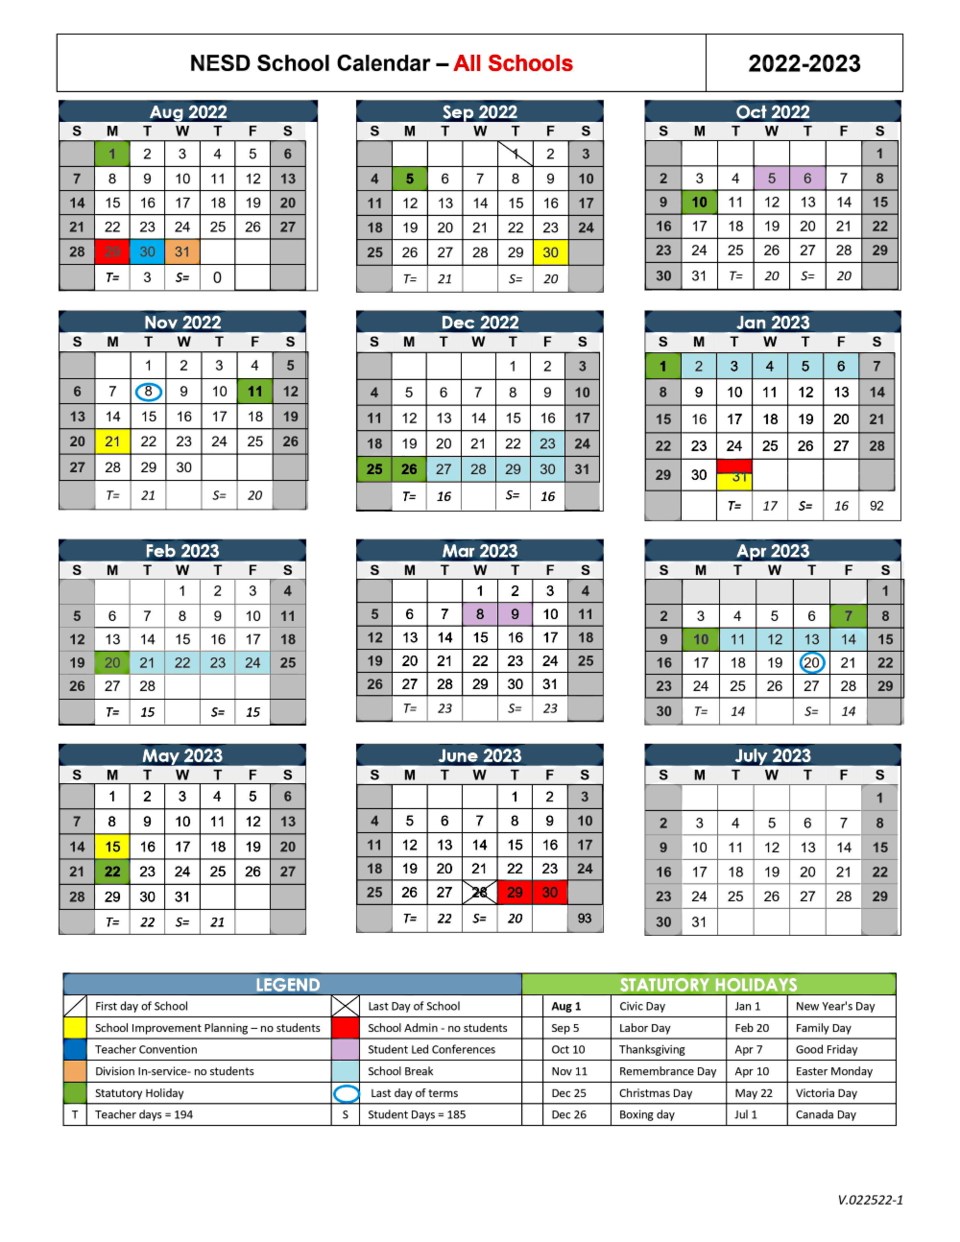 North East School Division releases 202223 school calendars SaskToday.ca